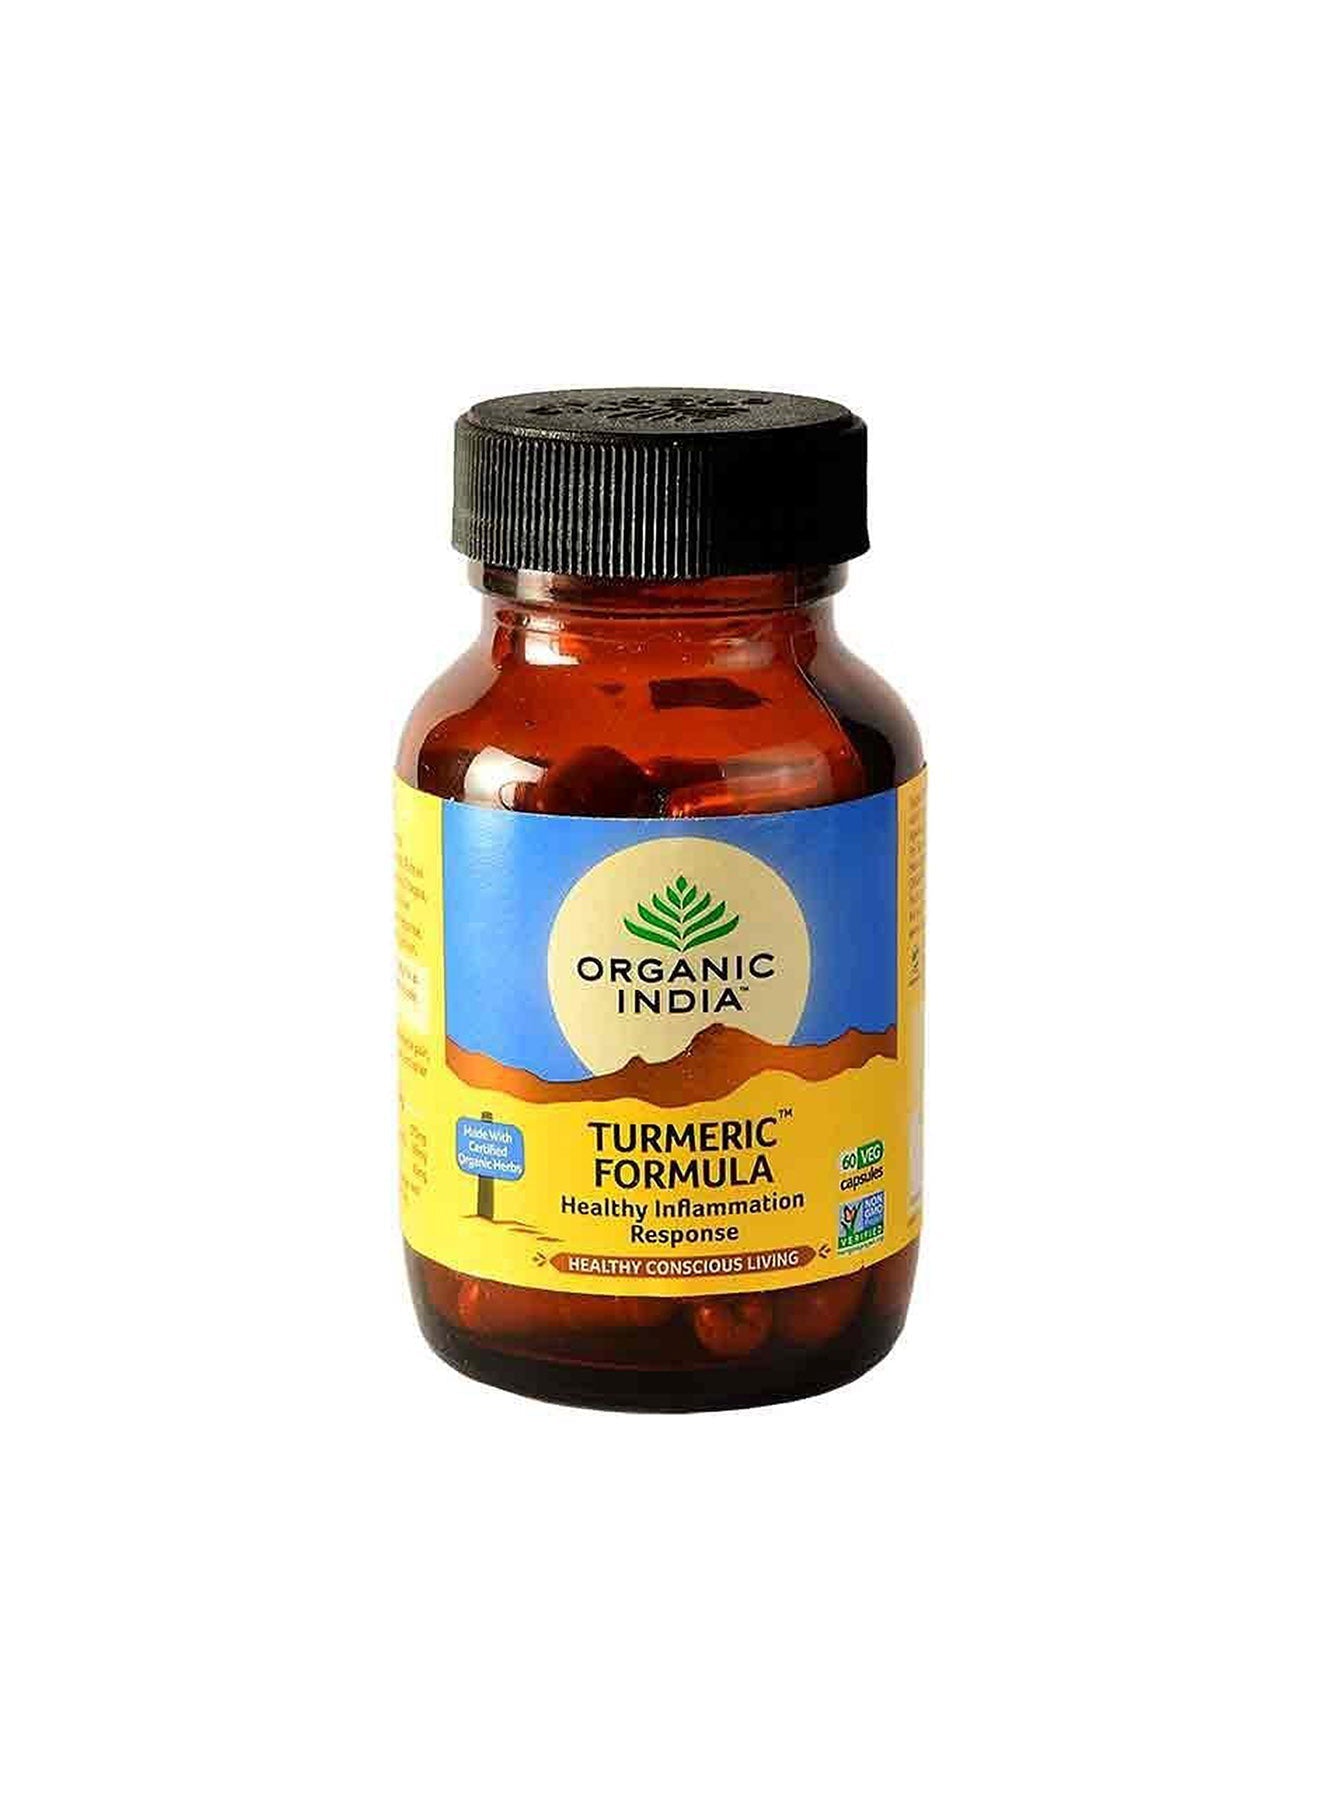 Organic India Turmeric Formula 60 Capsules Bottle Value Pack of 3 